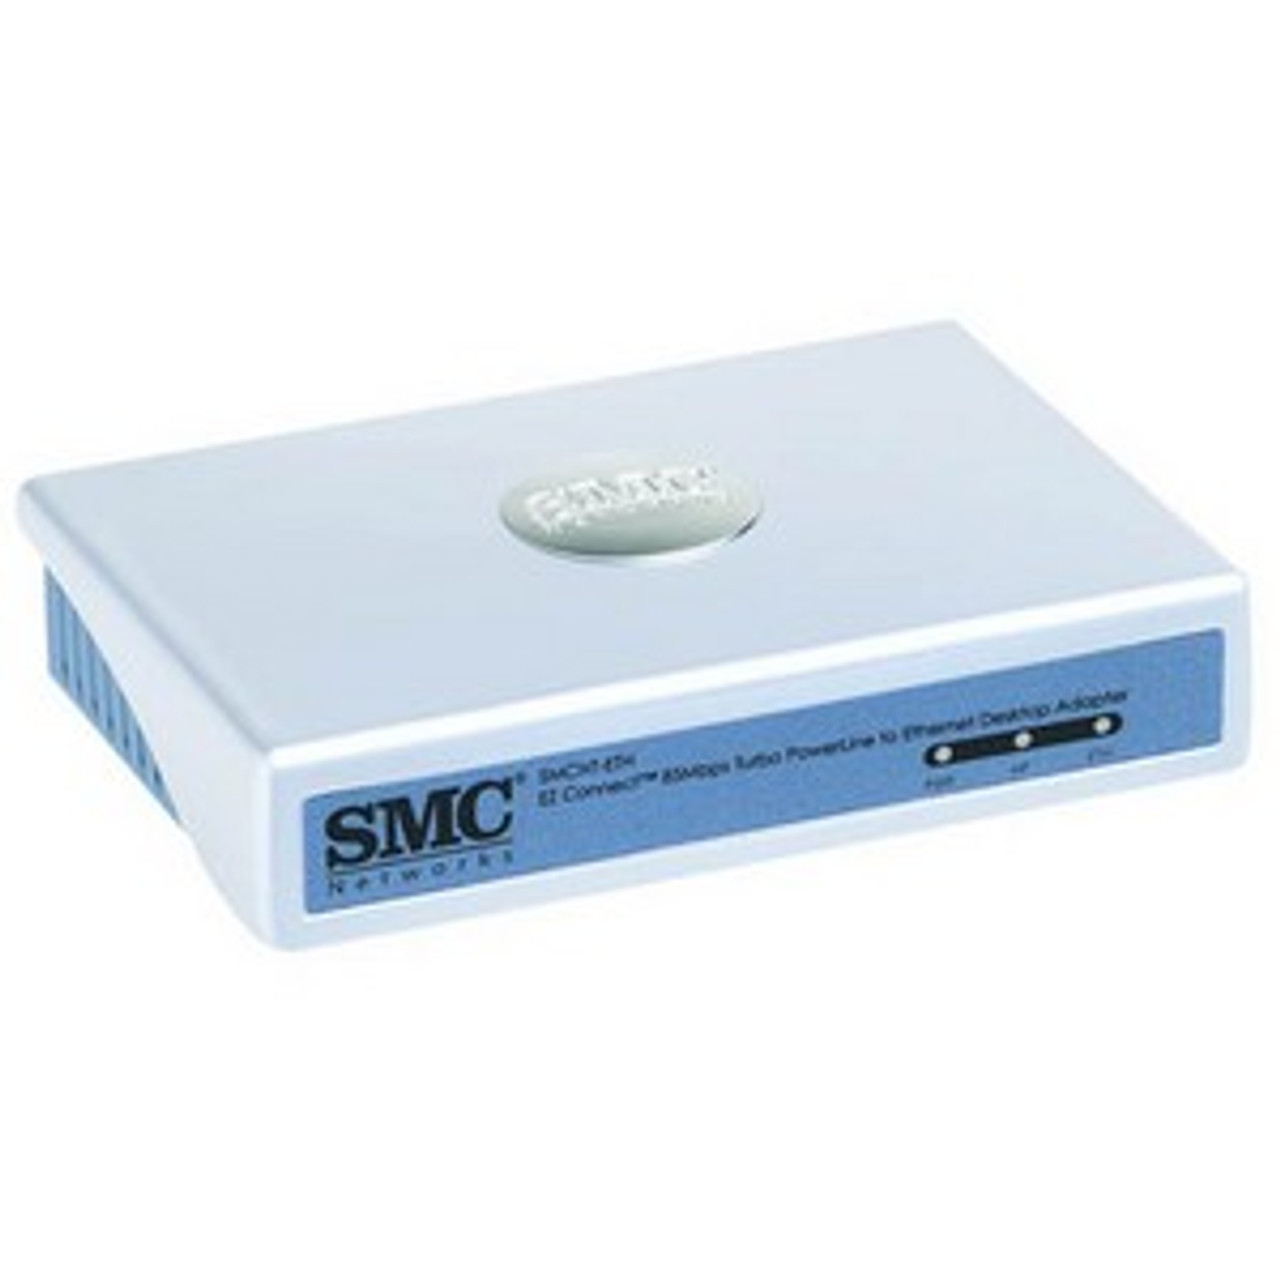 SMCHT-ETH SMC EZ Connect 85MB/s Turbo Powerline to Ethernet Desktop Adapter